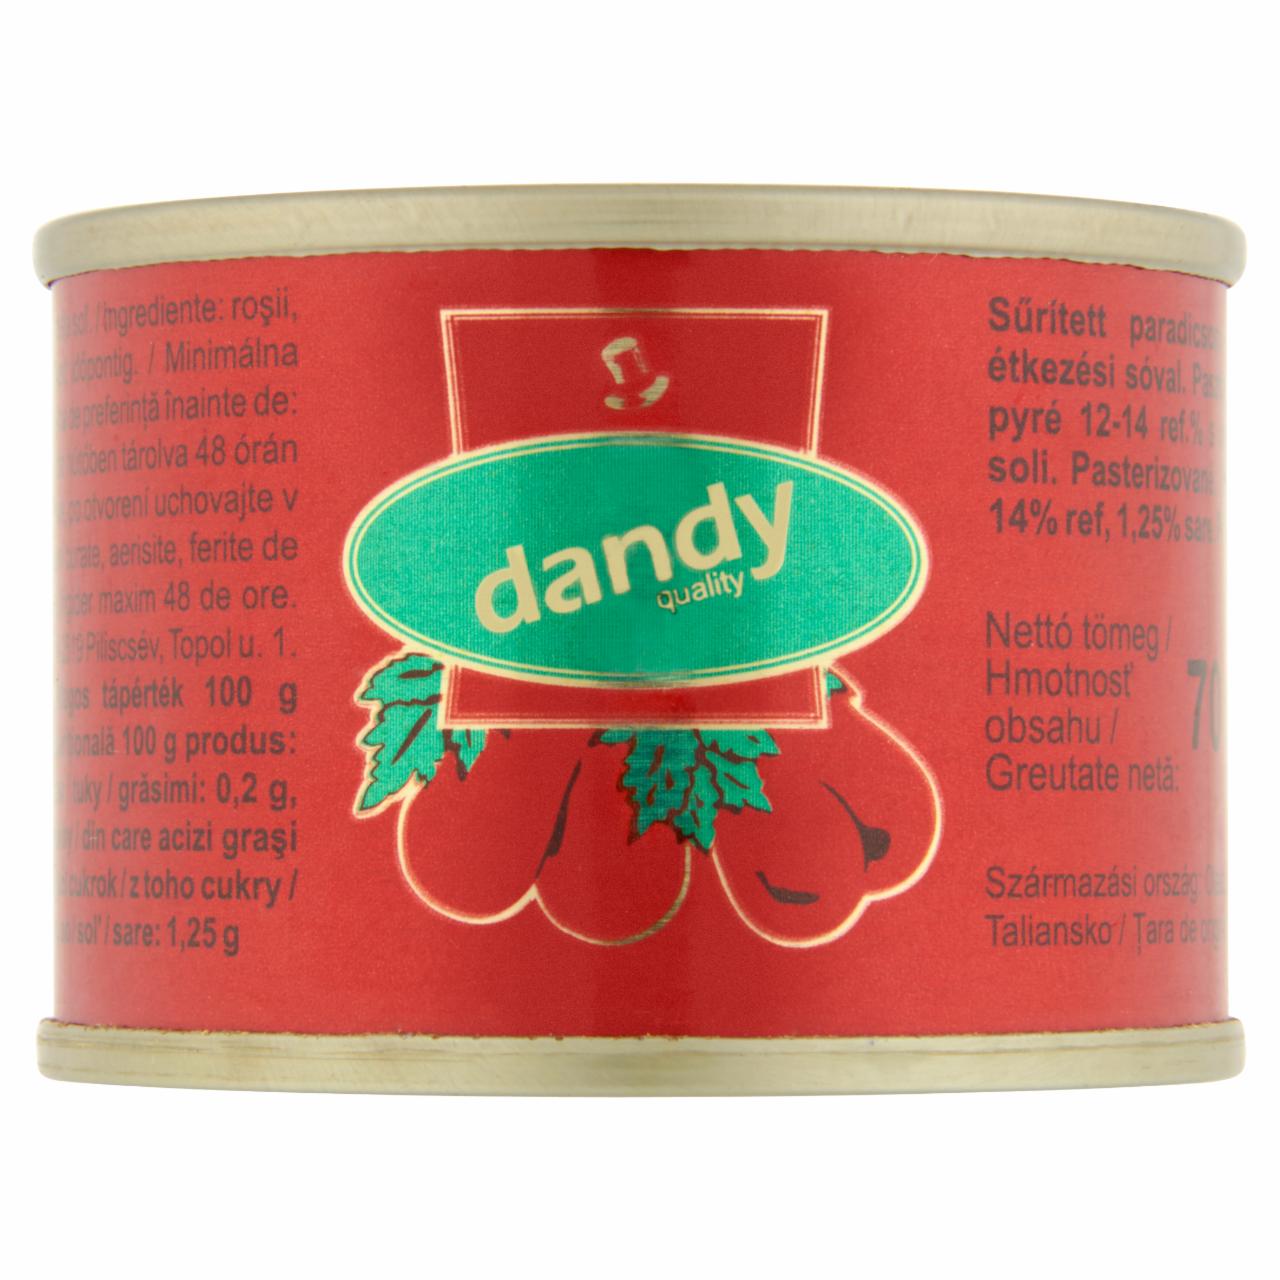 Képek - Dandy sűrített paradicsom 70 g